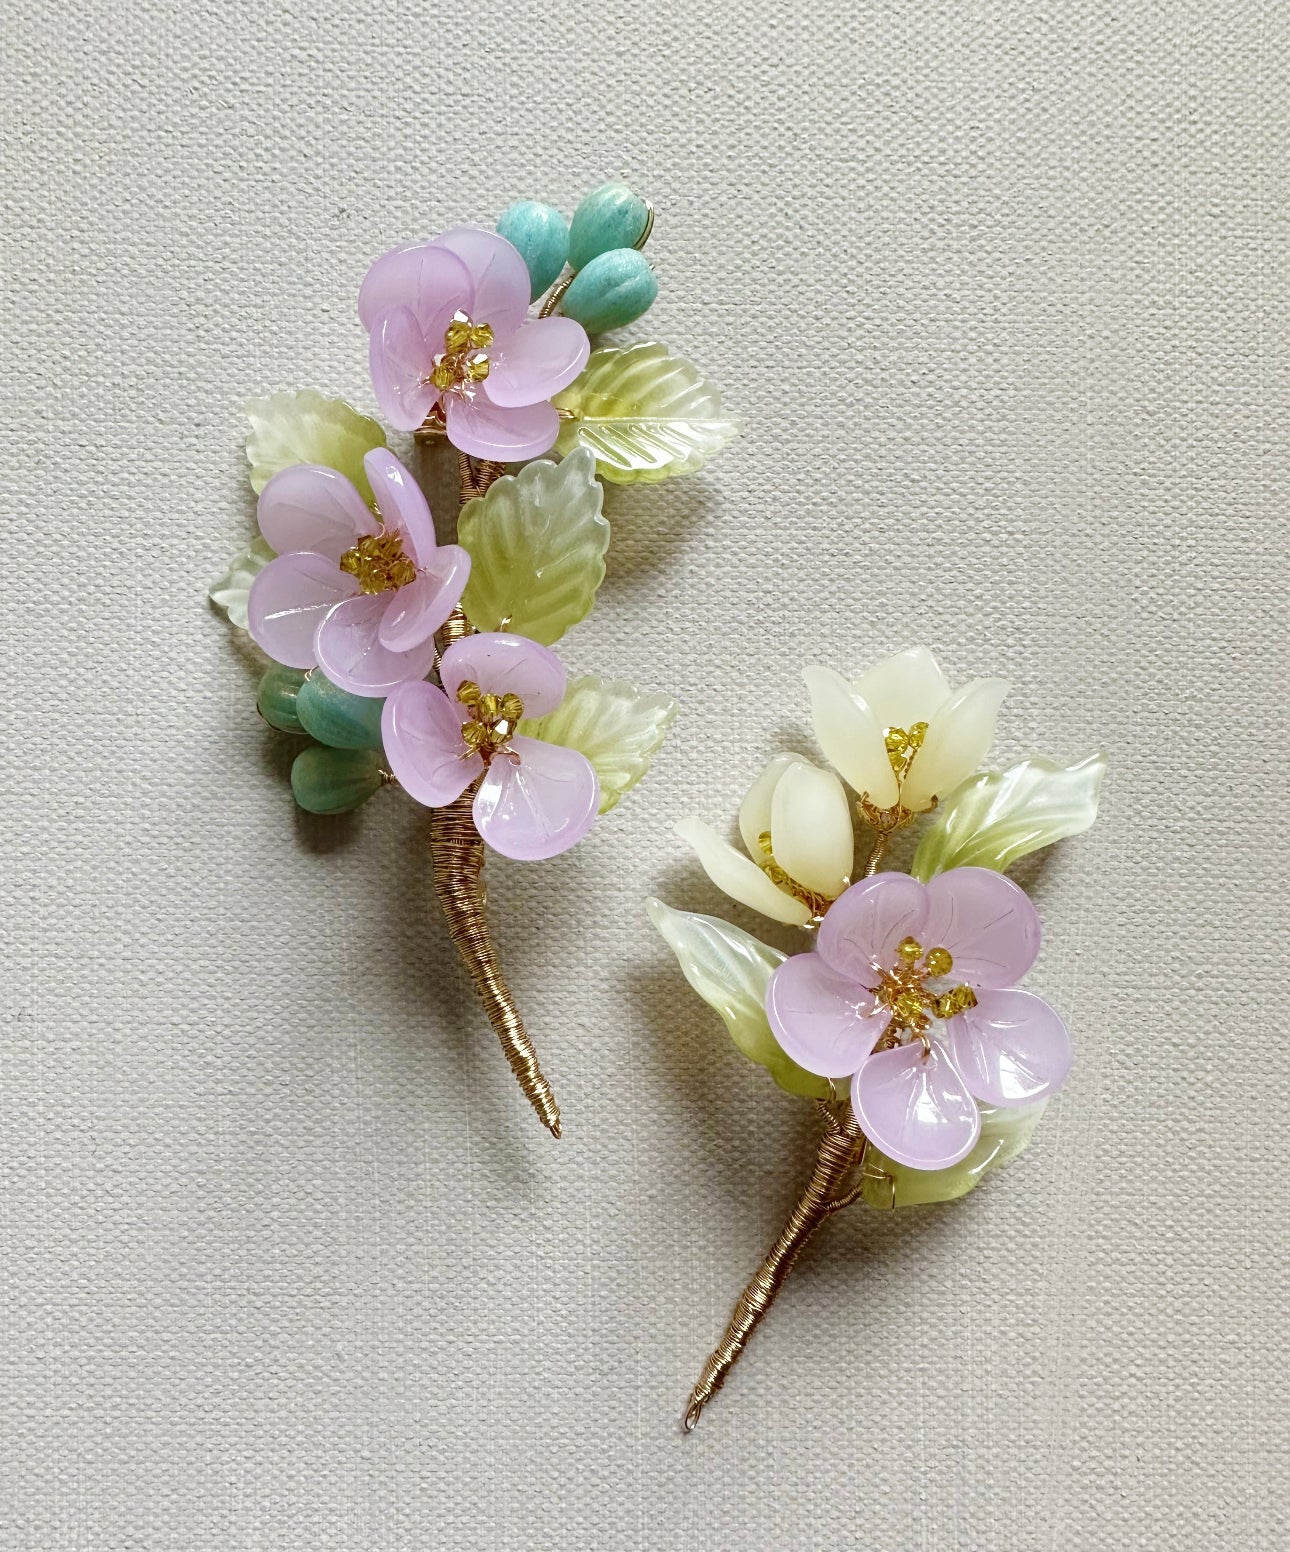 《Anita's Spring Garden》 plum blossom and lily brooch